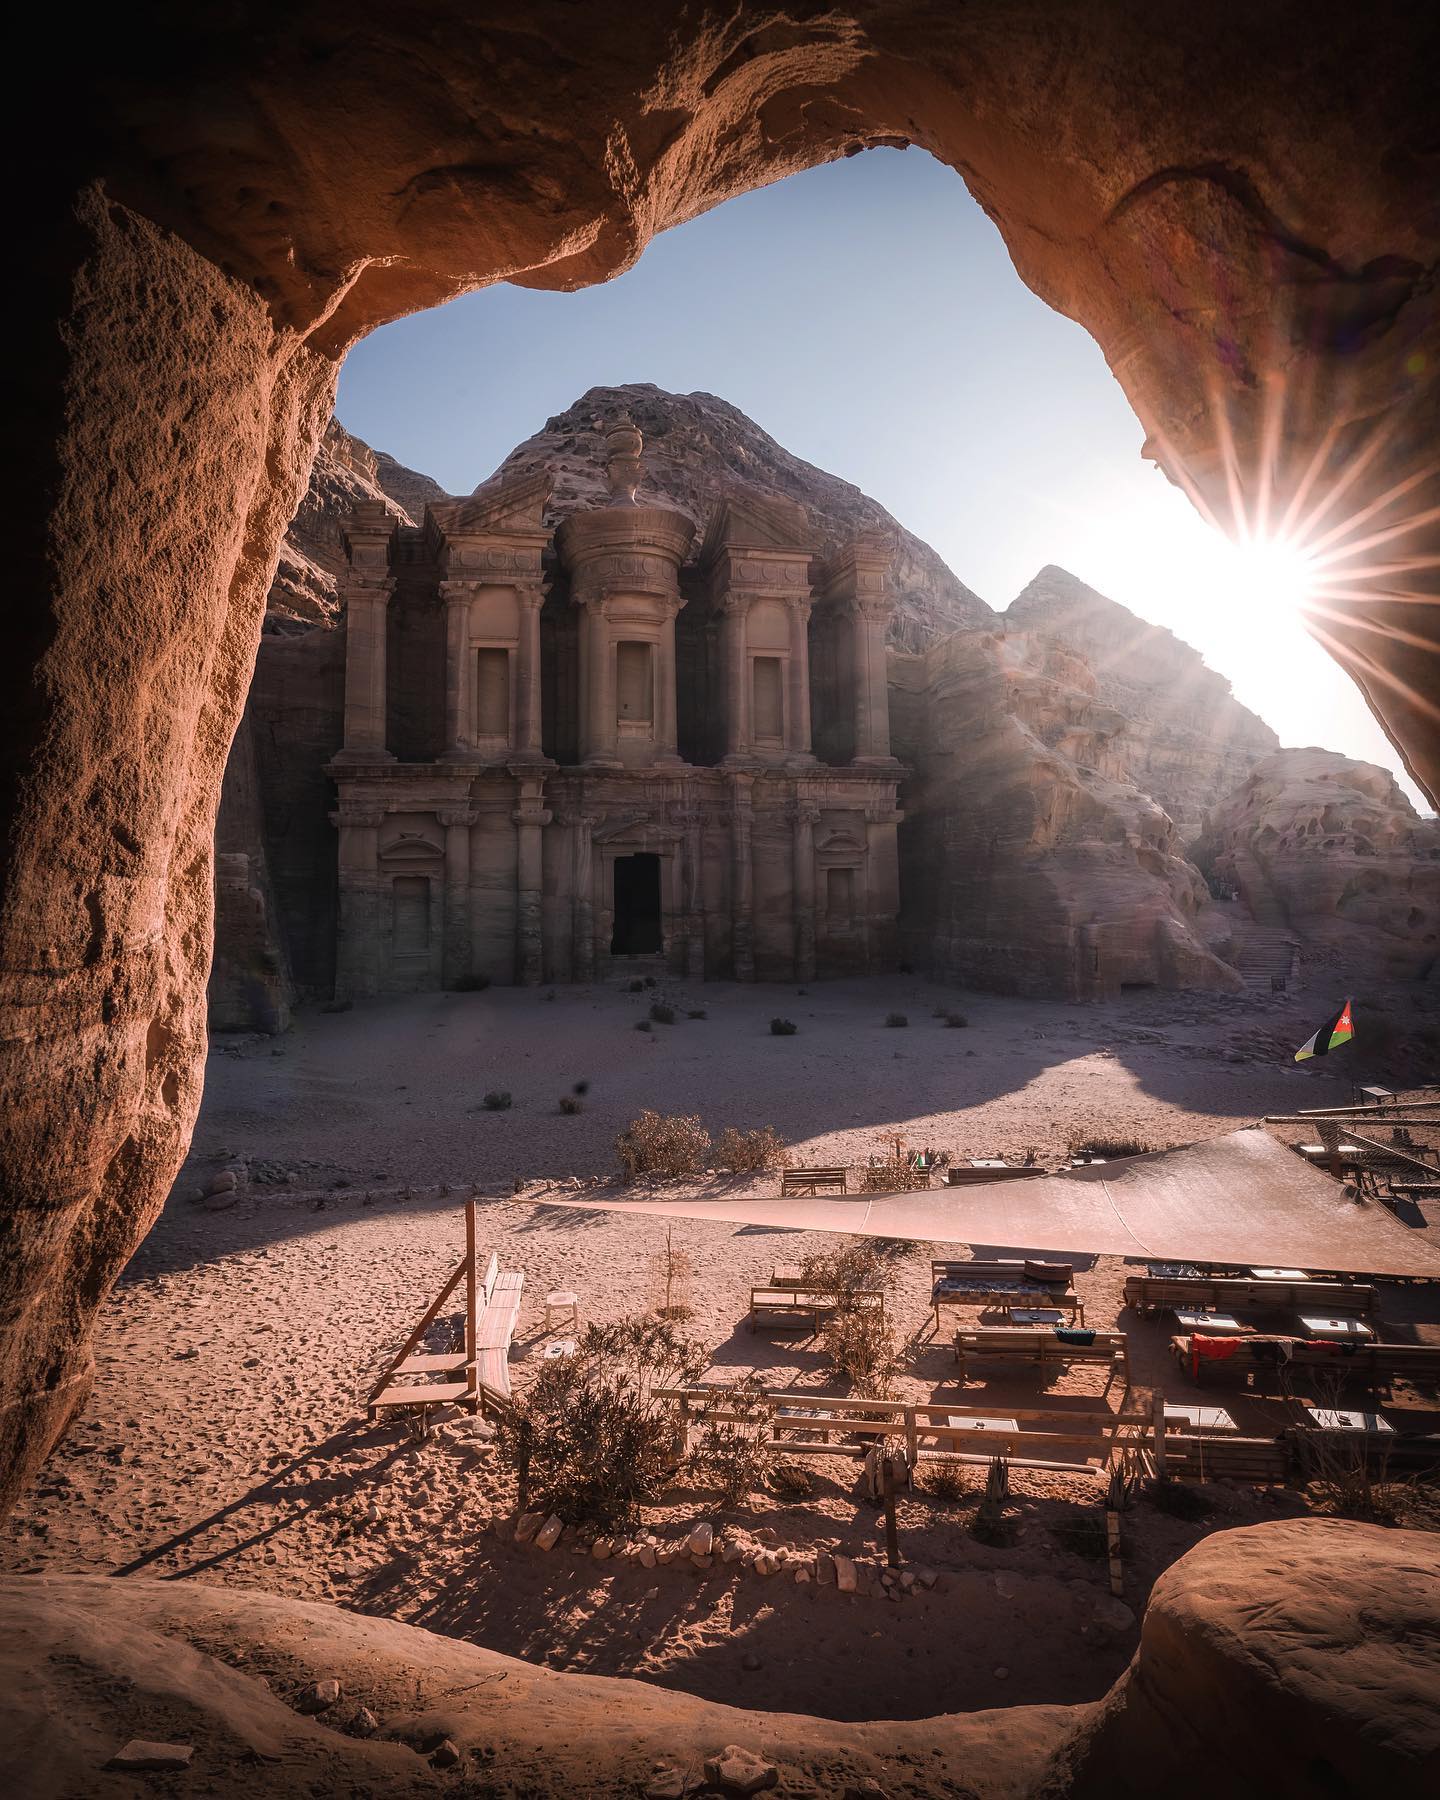 Petra, Jordan: A Wonder Of The World